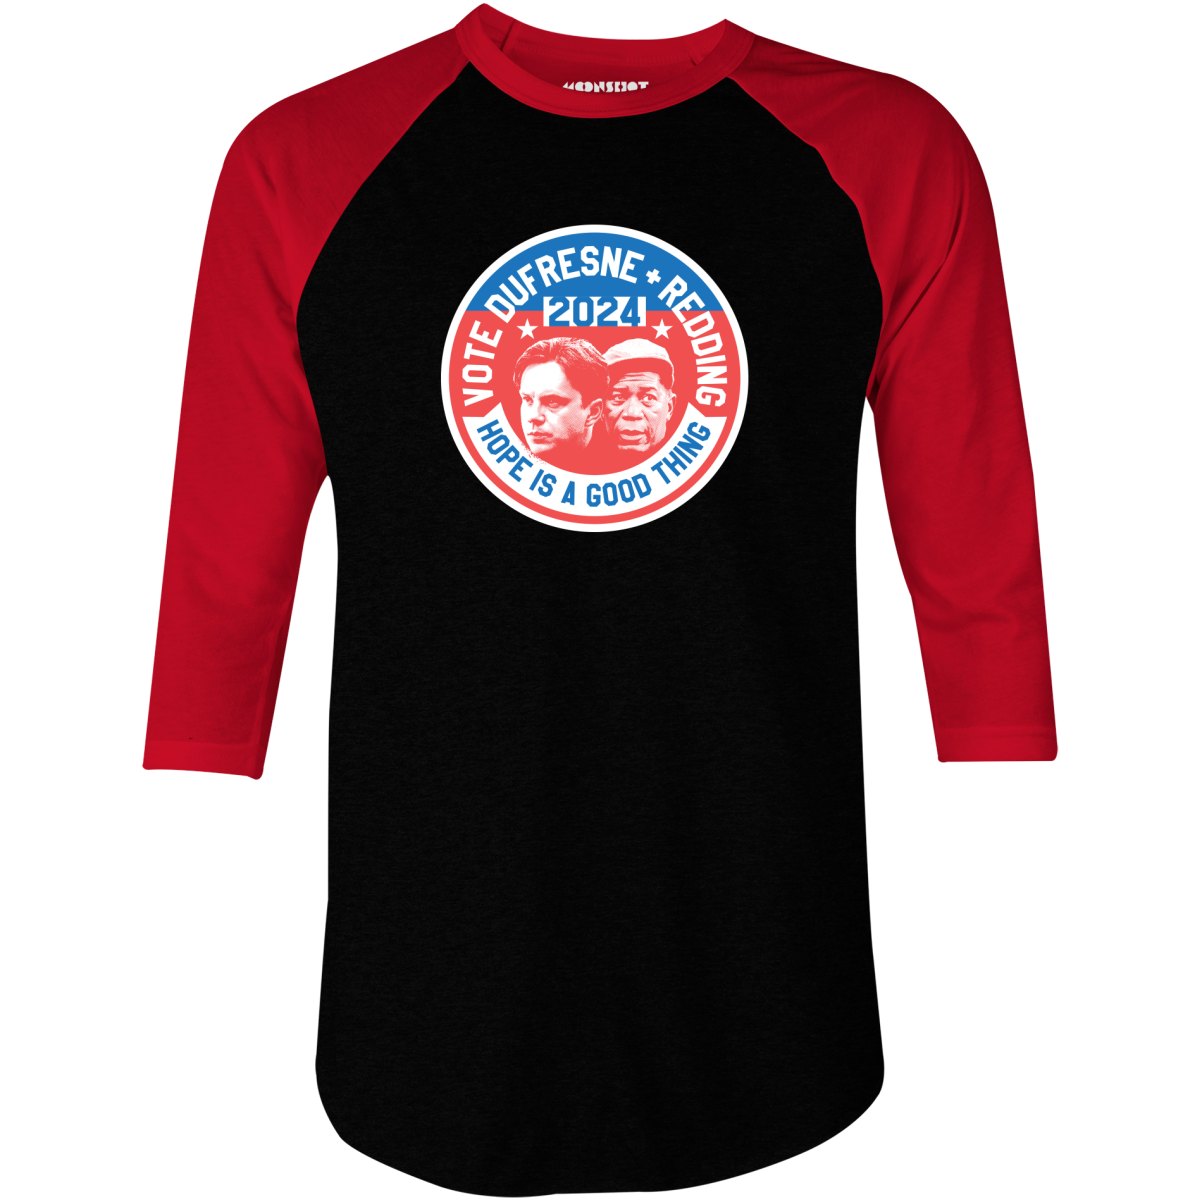 Dufresne Redding 2024 - 3/4 Sleeve Raglan T-Shirt